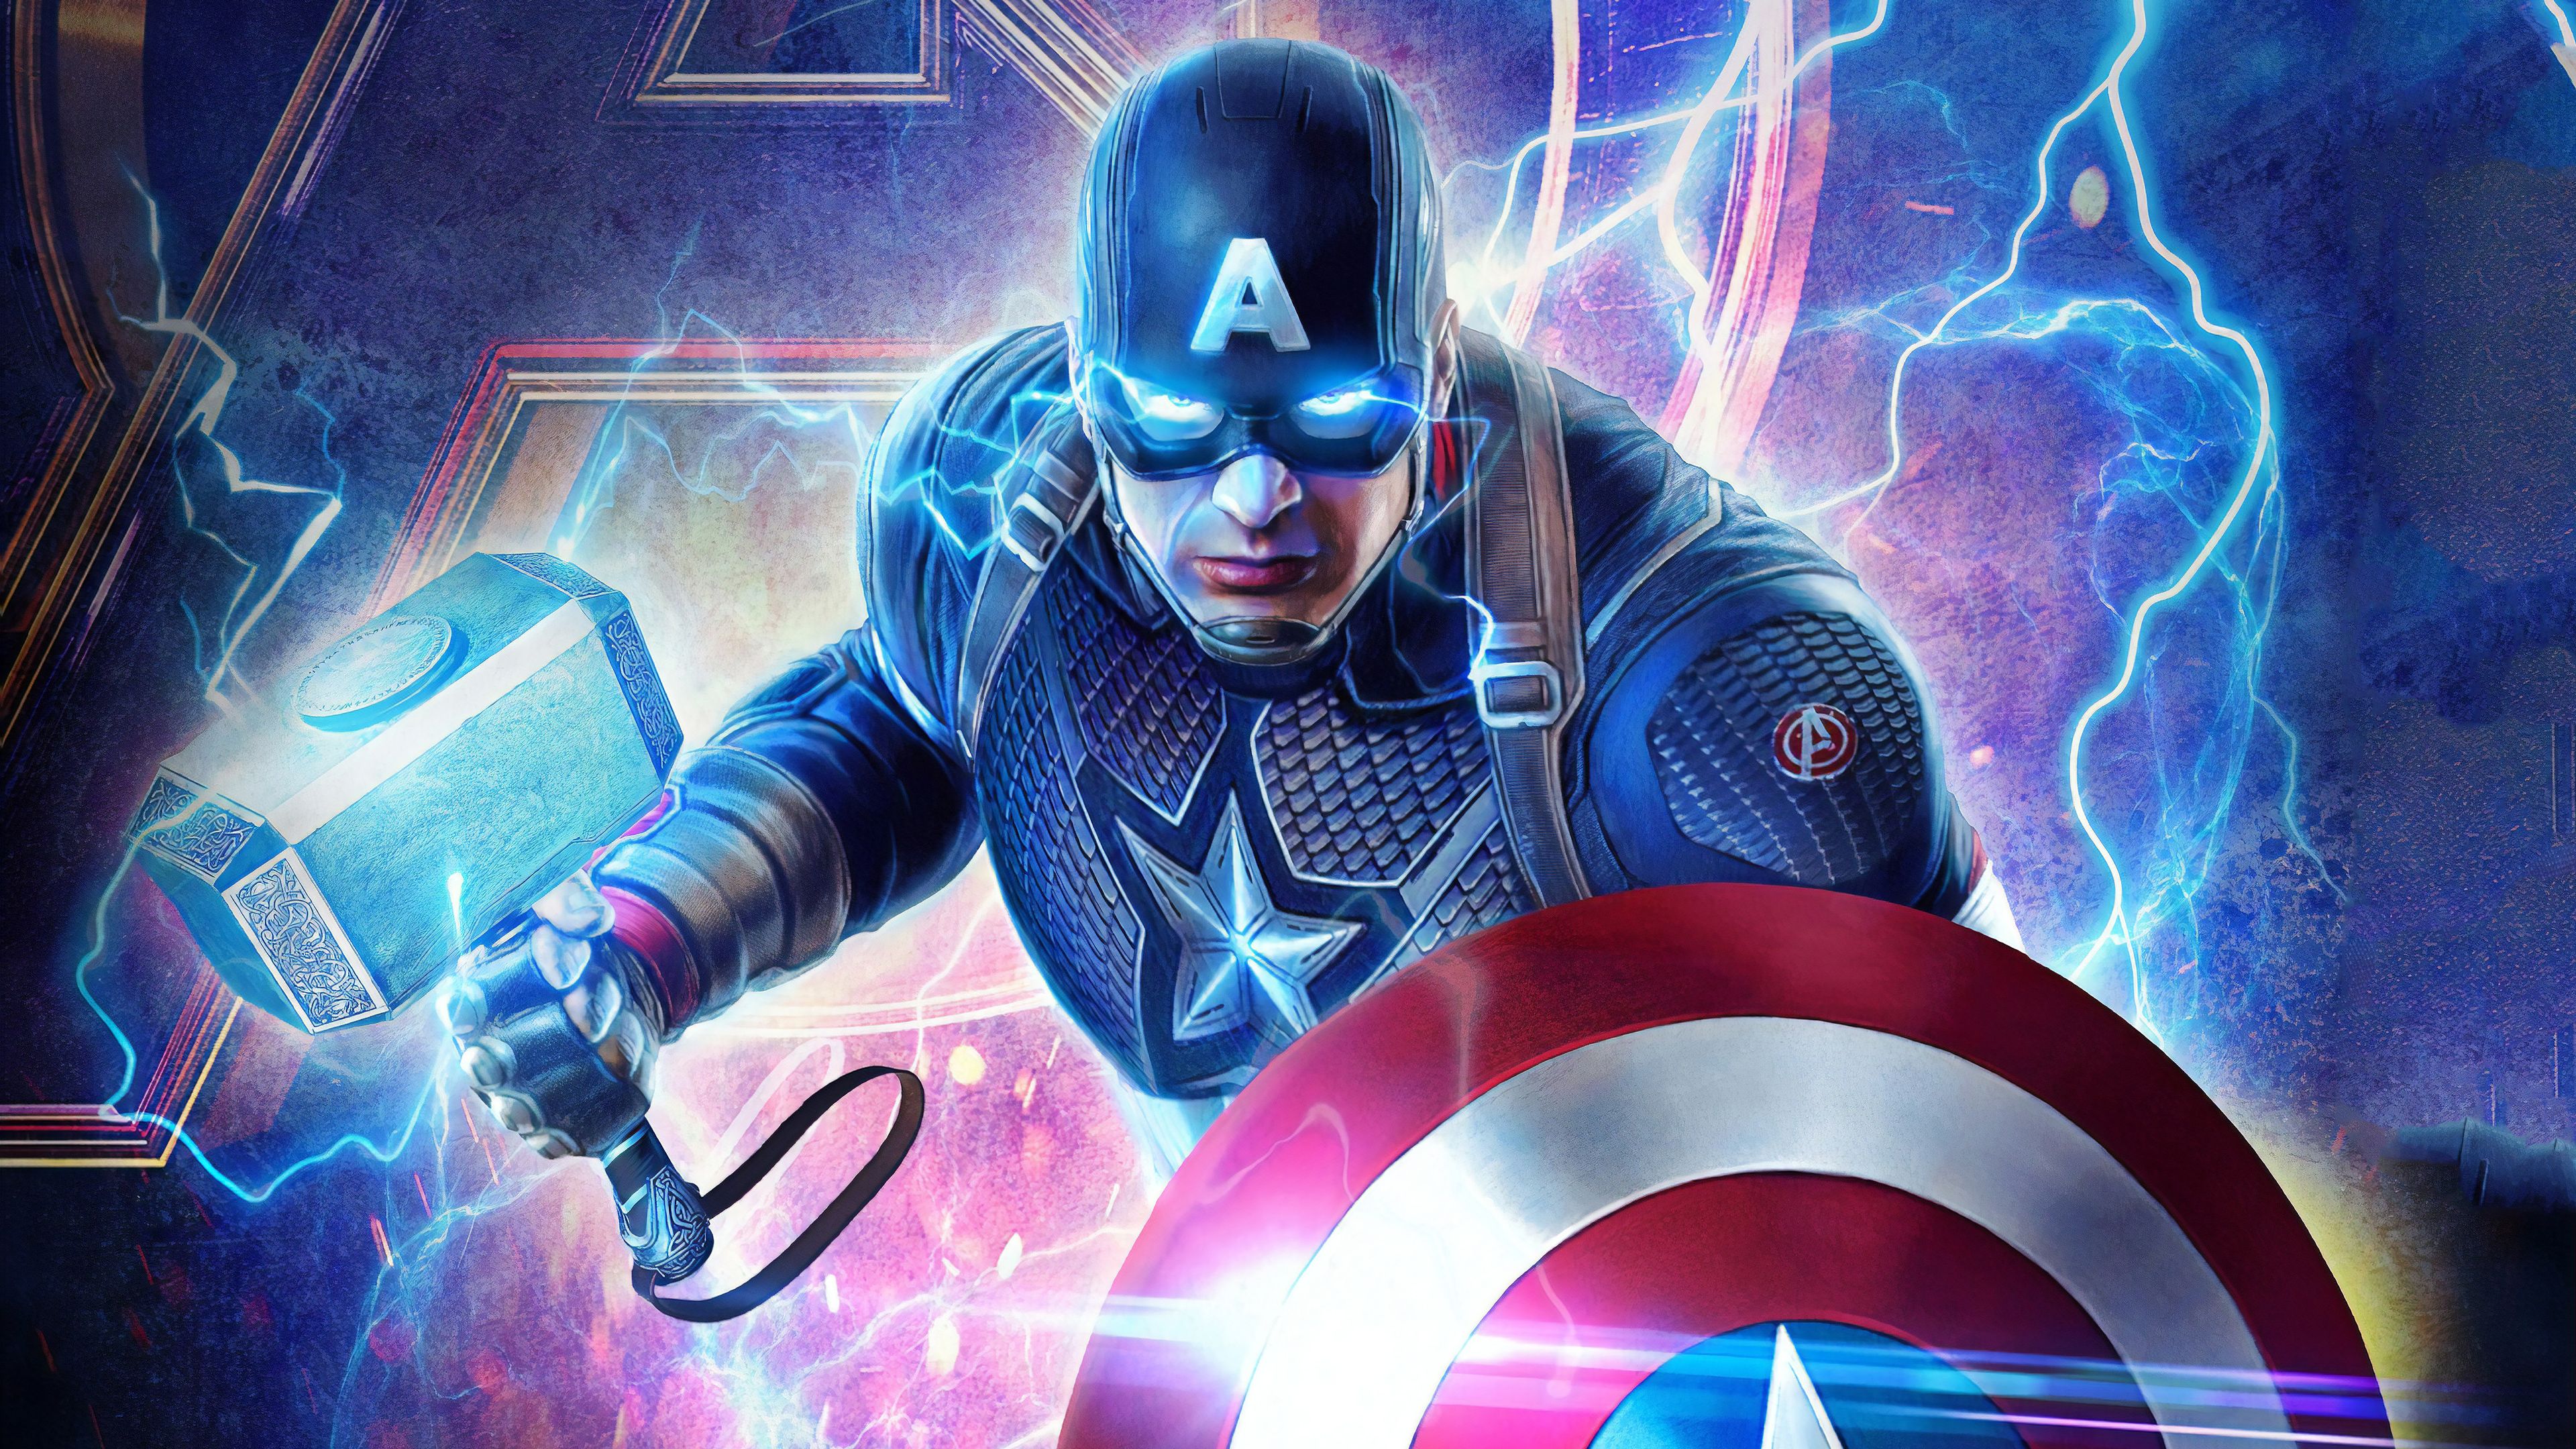 Captain America Mjolnir Avengers Endgame 4k, HD Superheroes, 4k Wallpaper, Image, Background, Photo and Picture